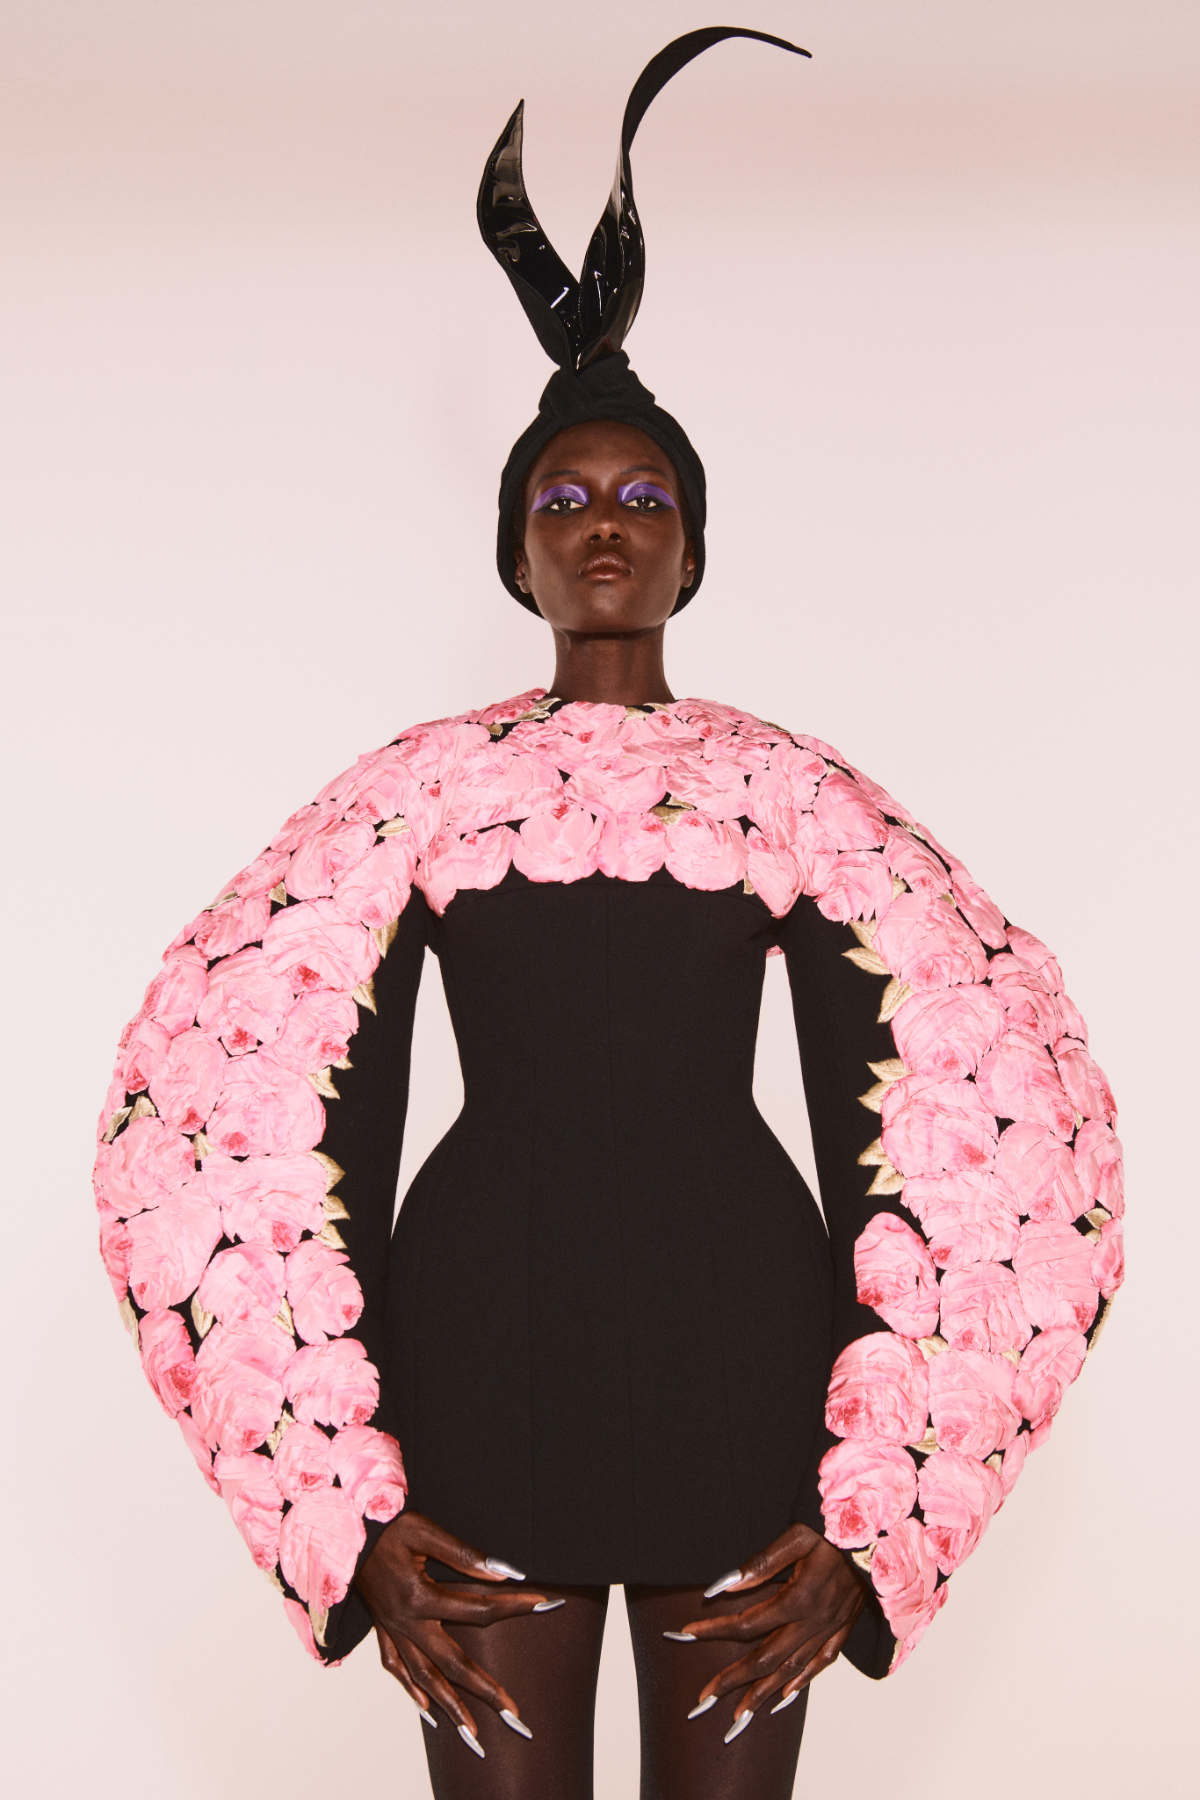 Schiaparelli Presents Its New Haute Couture FW21 Collection: 